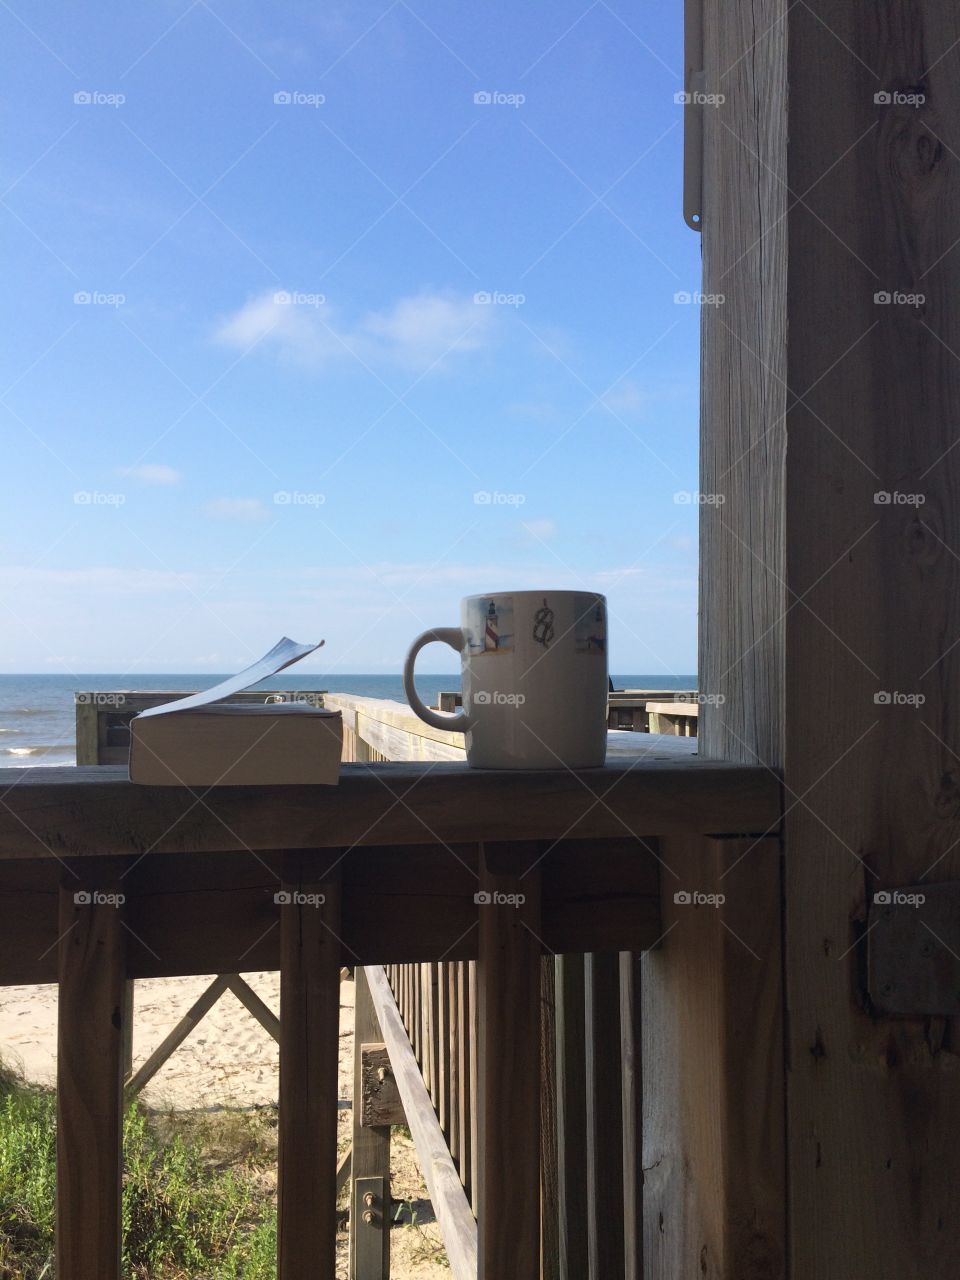 Coffee, book, beach. A recipe for wellness. 